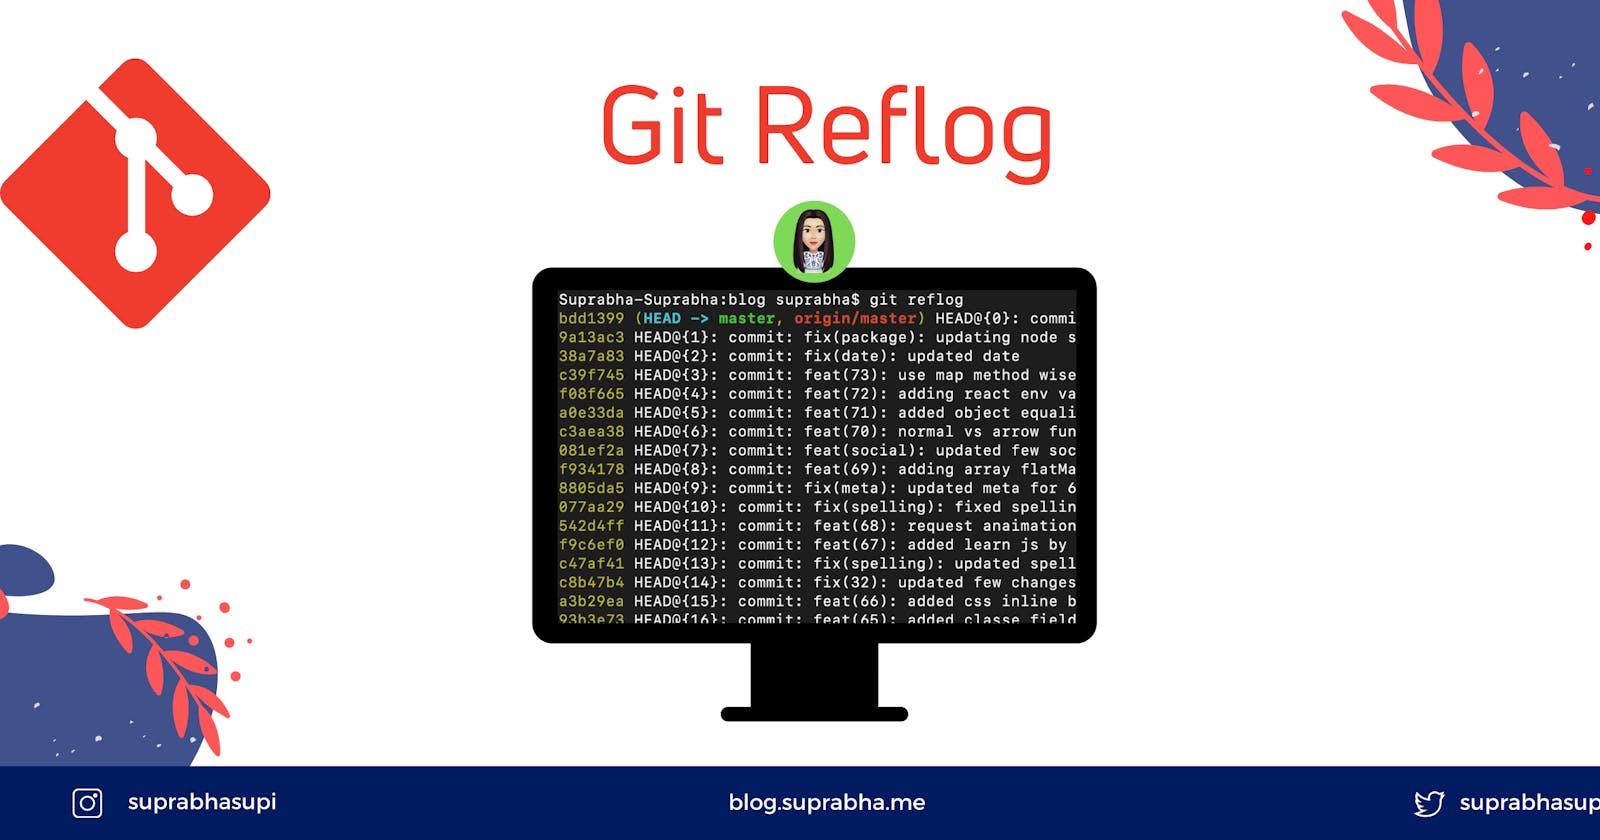 Importance of Git Reflog